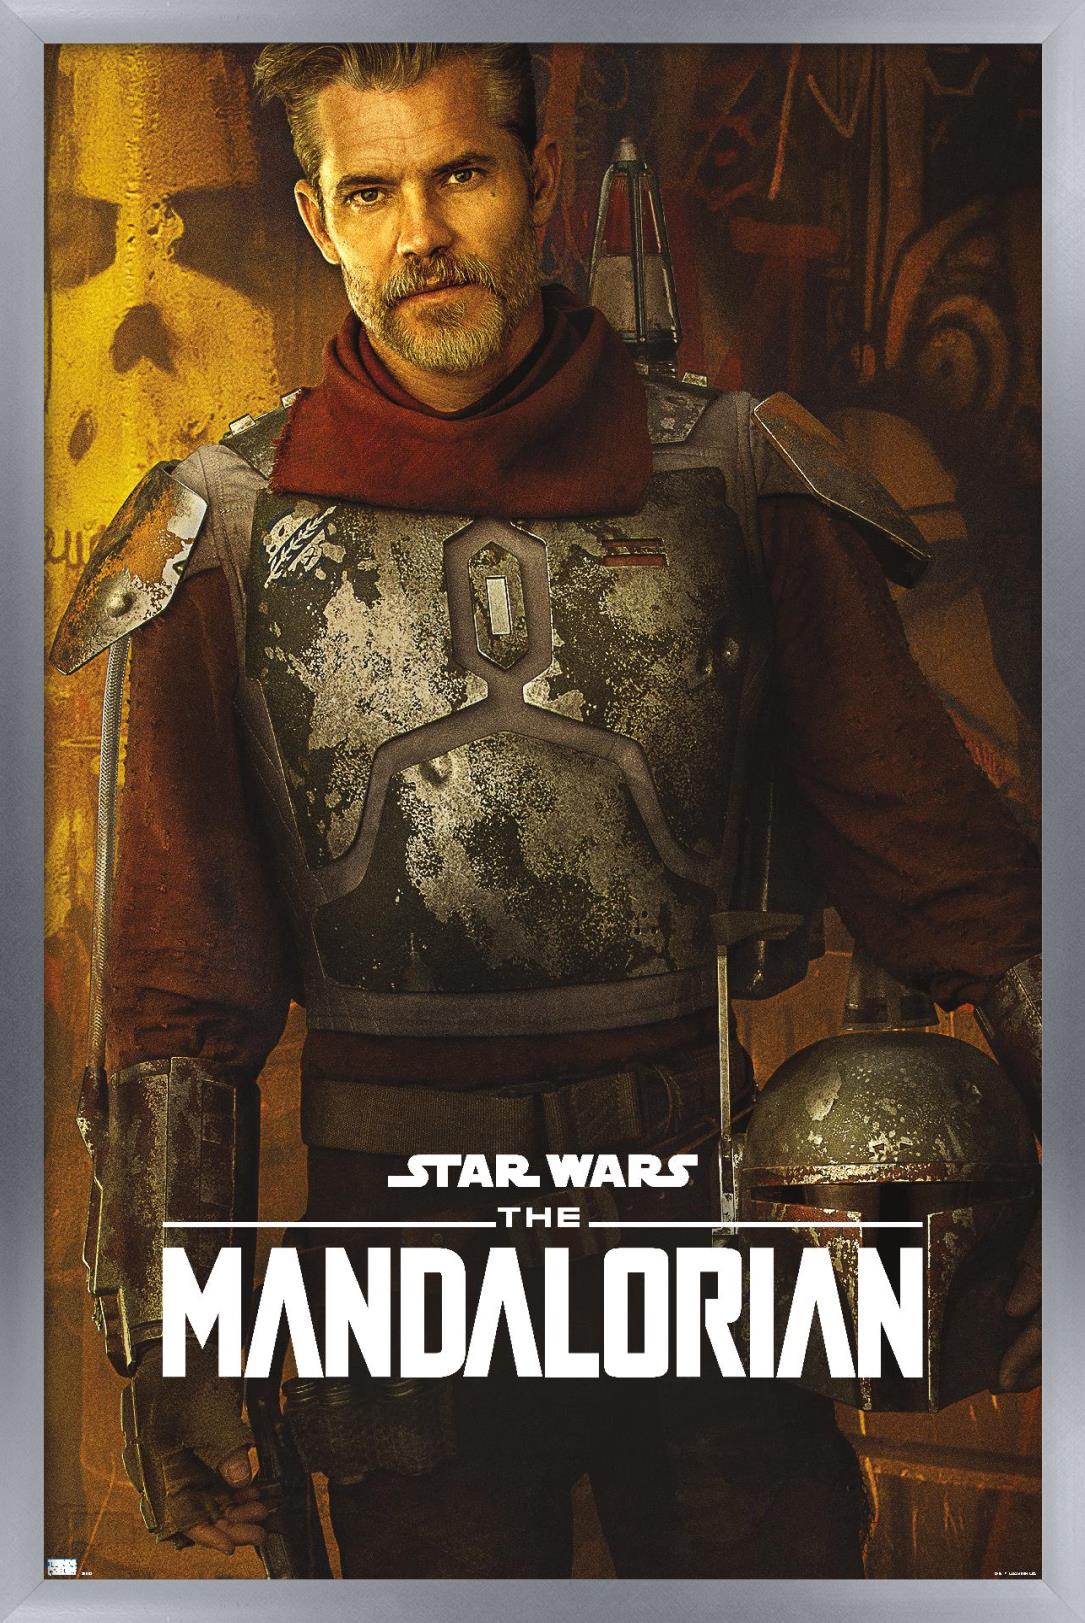 Star Wars: The Mandalorian Season 2 - Cobb Vanth Wall Poster, 22.375" x 34", Framed - image 1 of 5